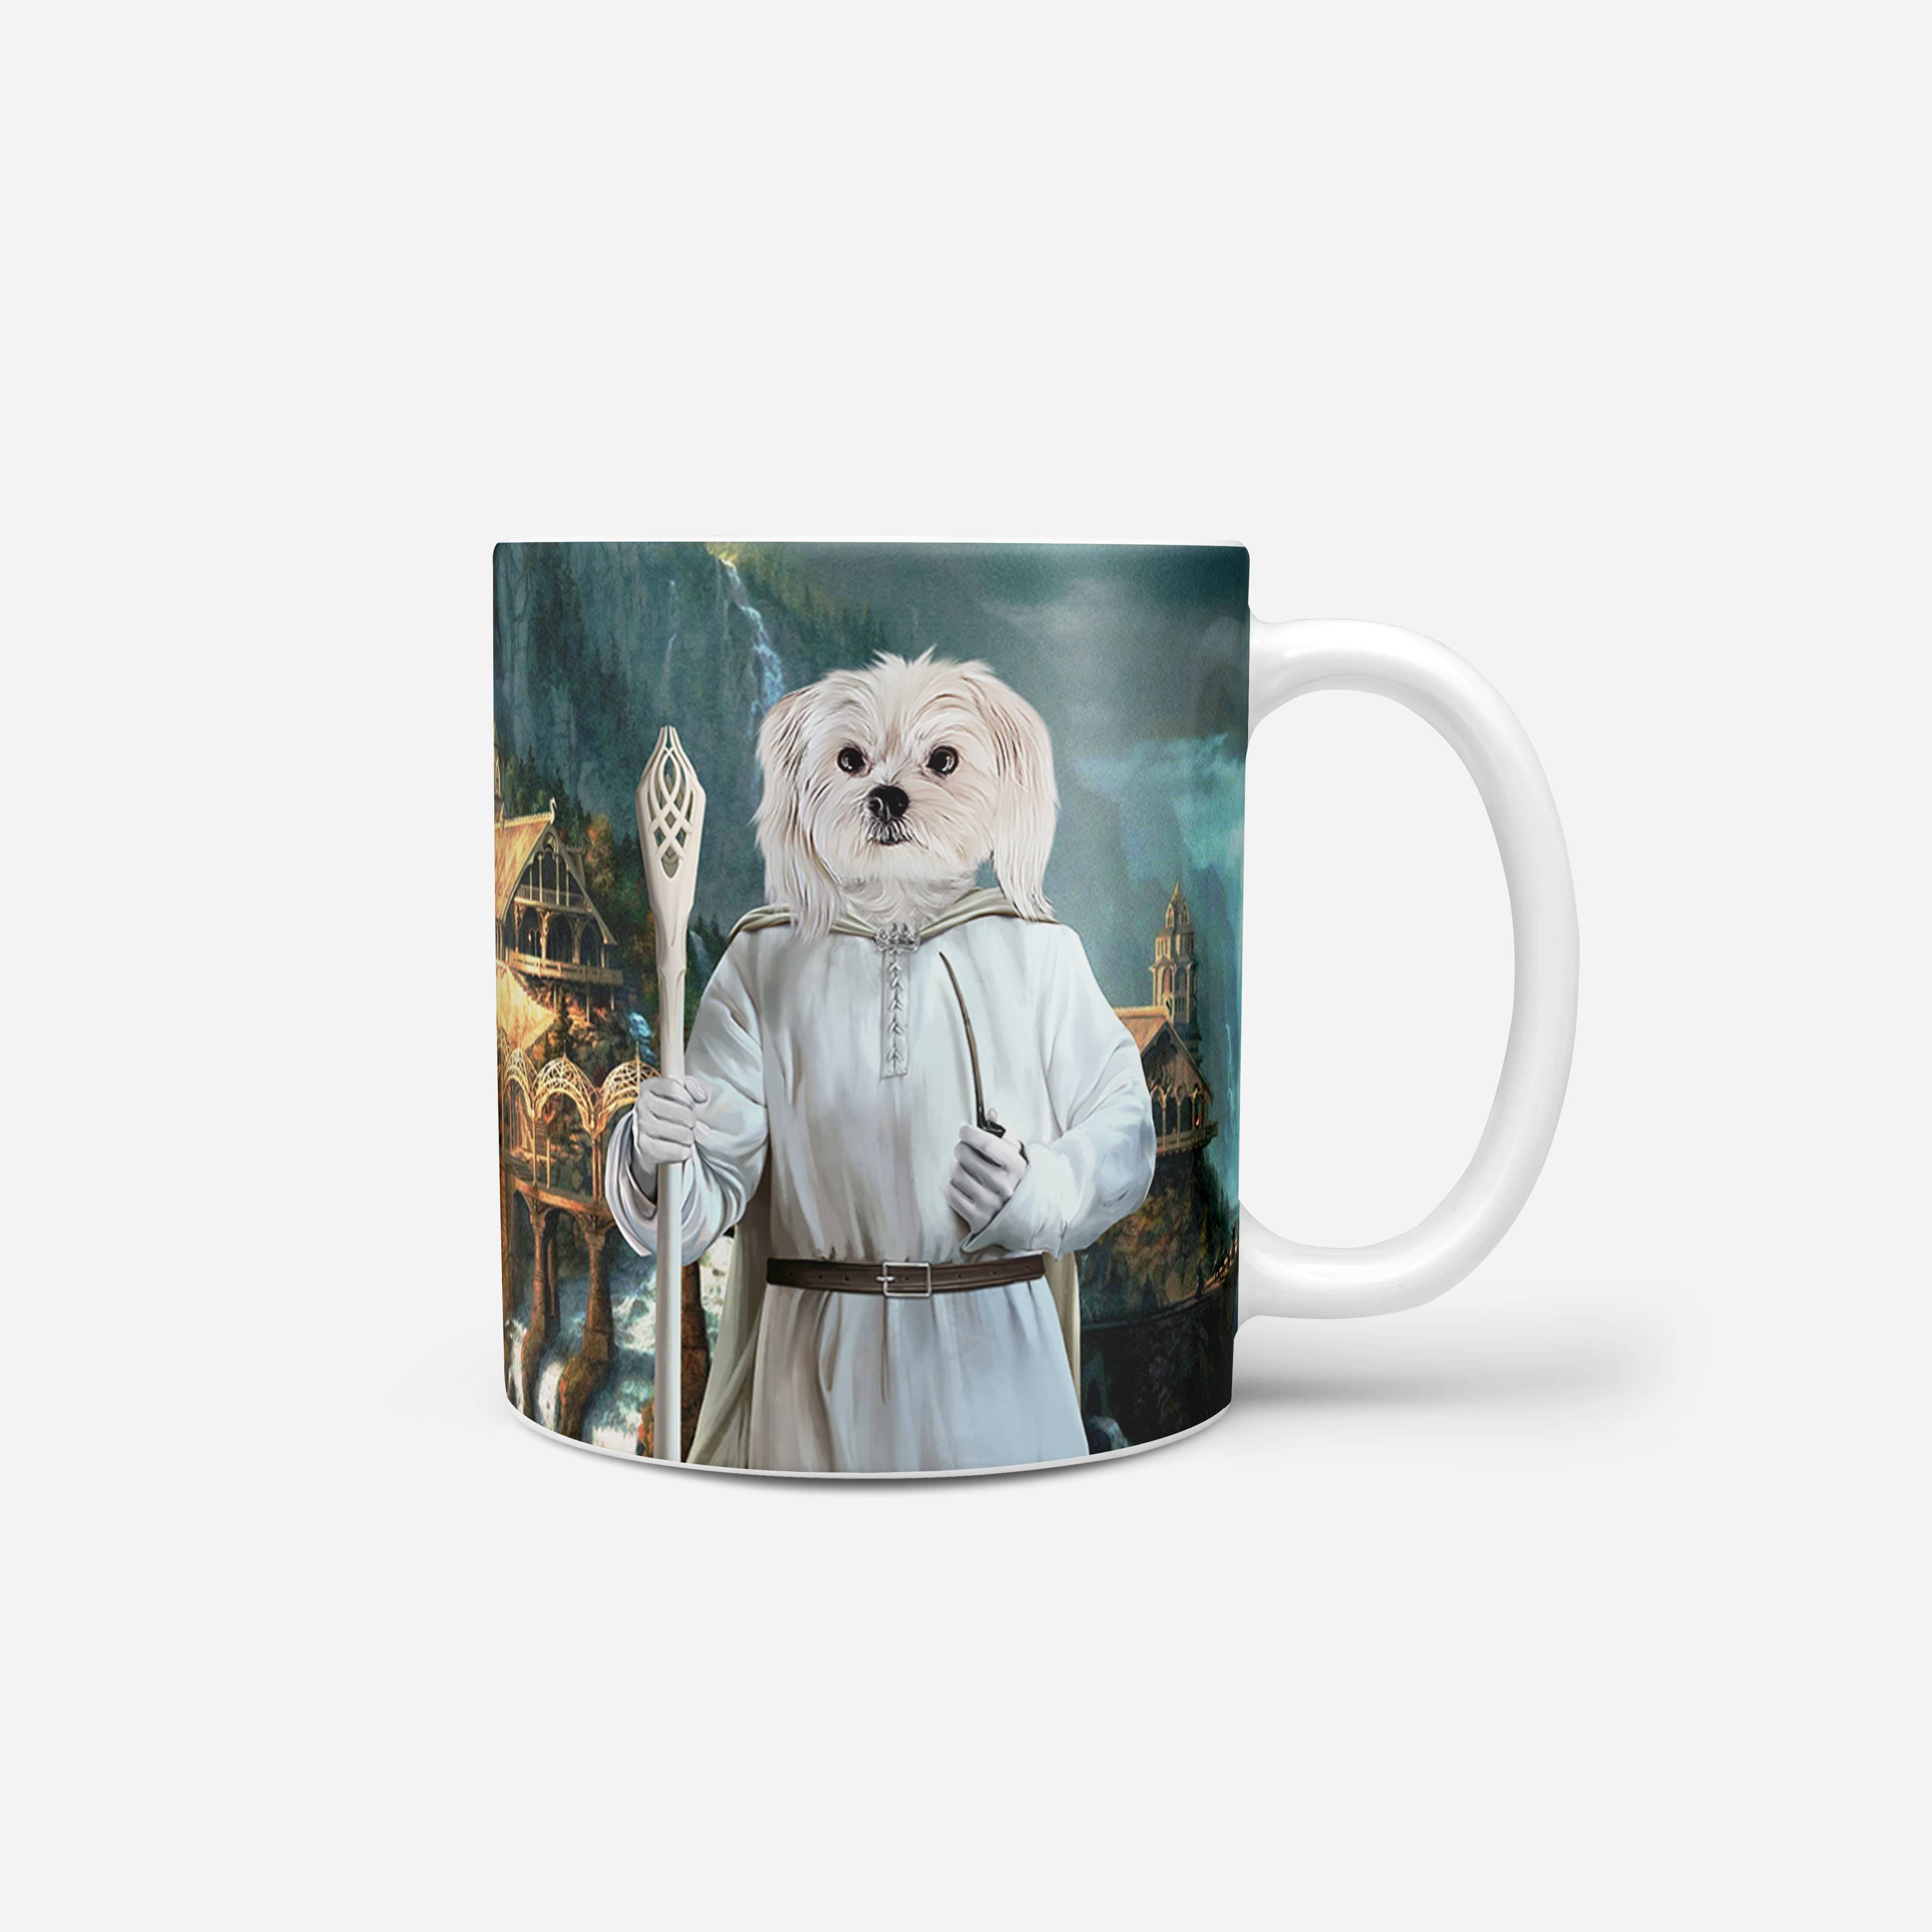 The Sorcerer - Custom Pet Mug